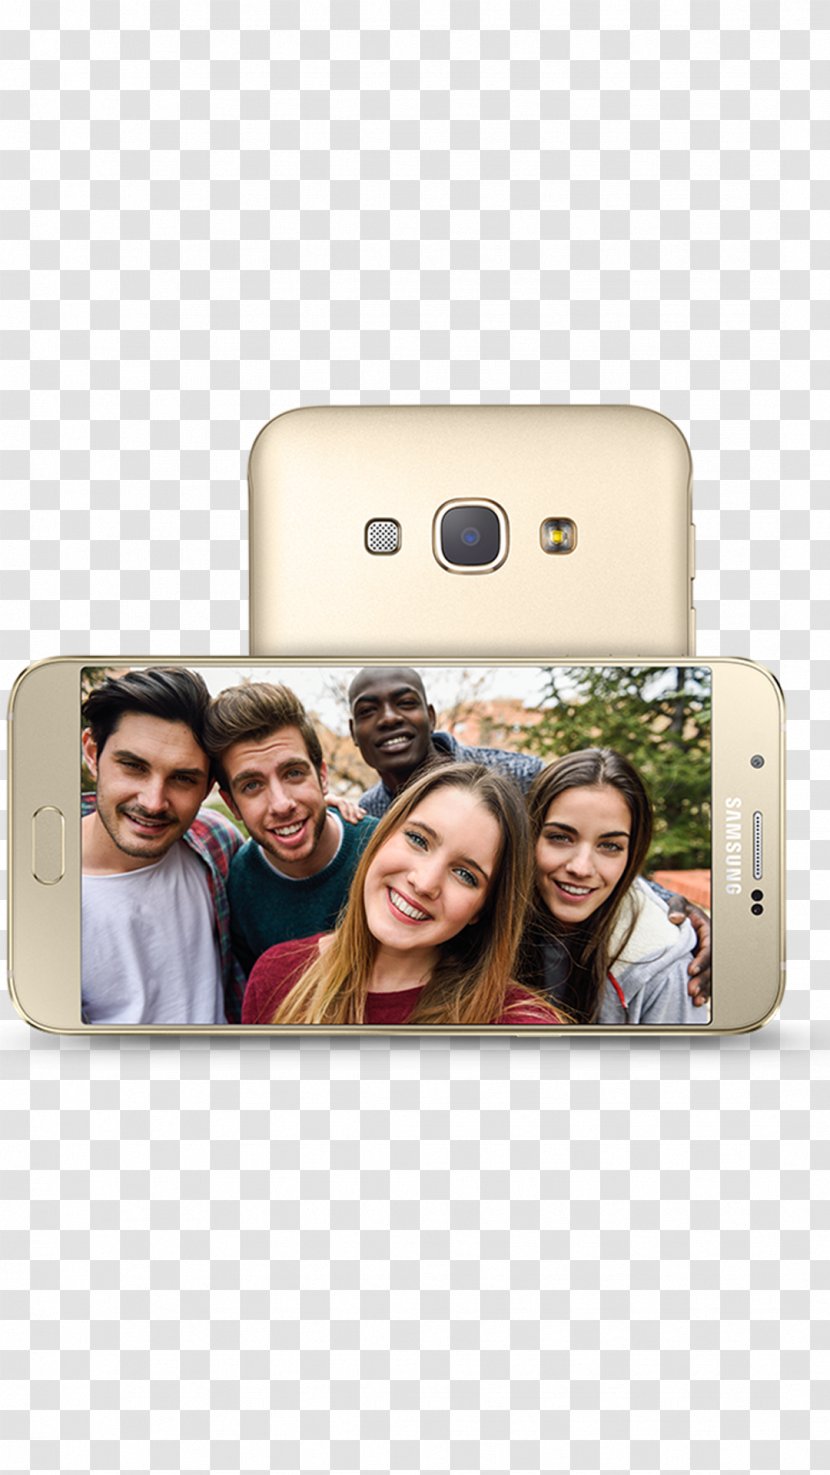 Samsung Galaxy A8 / A8+ Smartphone Selfie - Gadget Transparent PNG